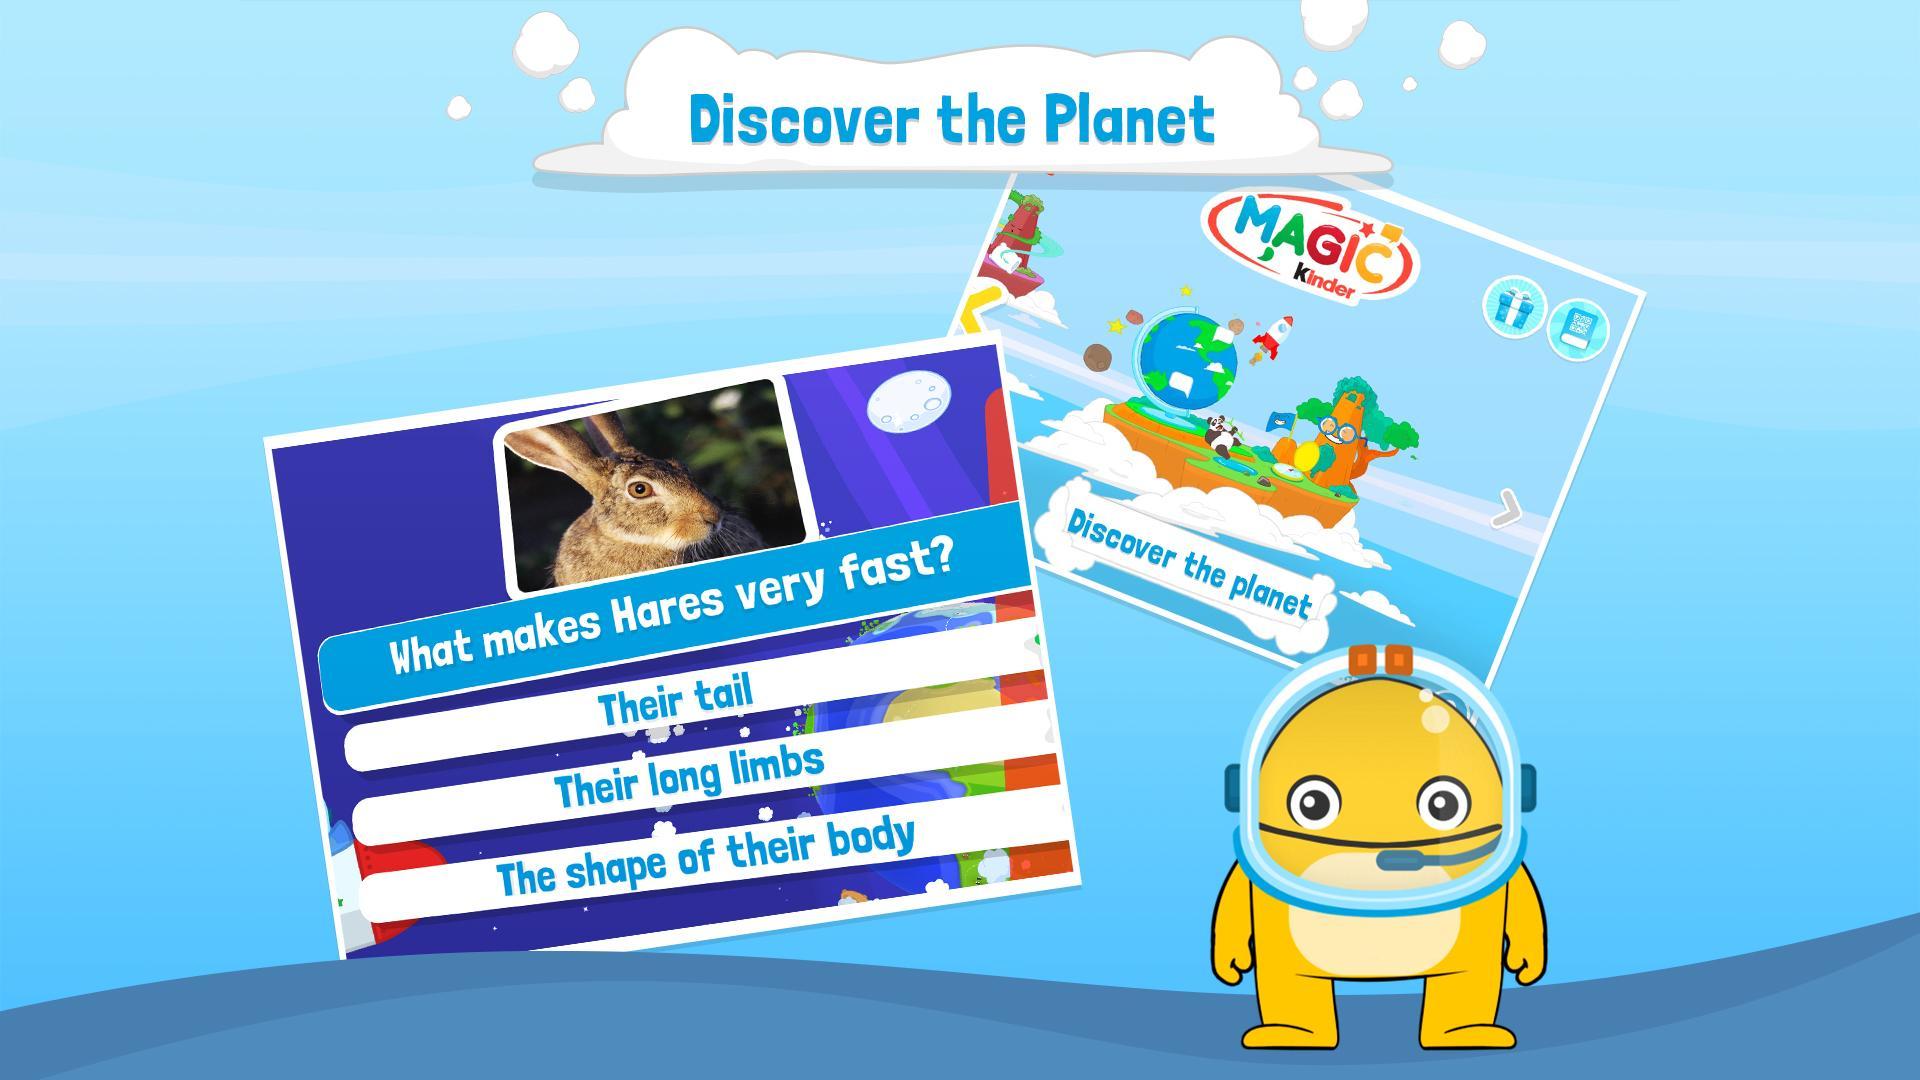 Magic Kinder Official App - Free Family Games 7.1.140 Screenshot 9